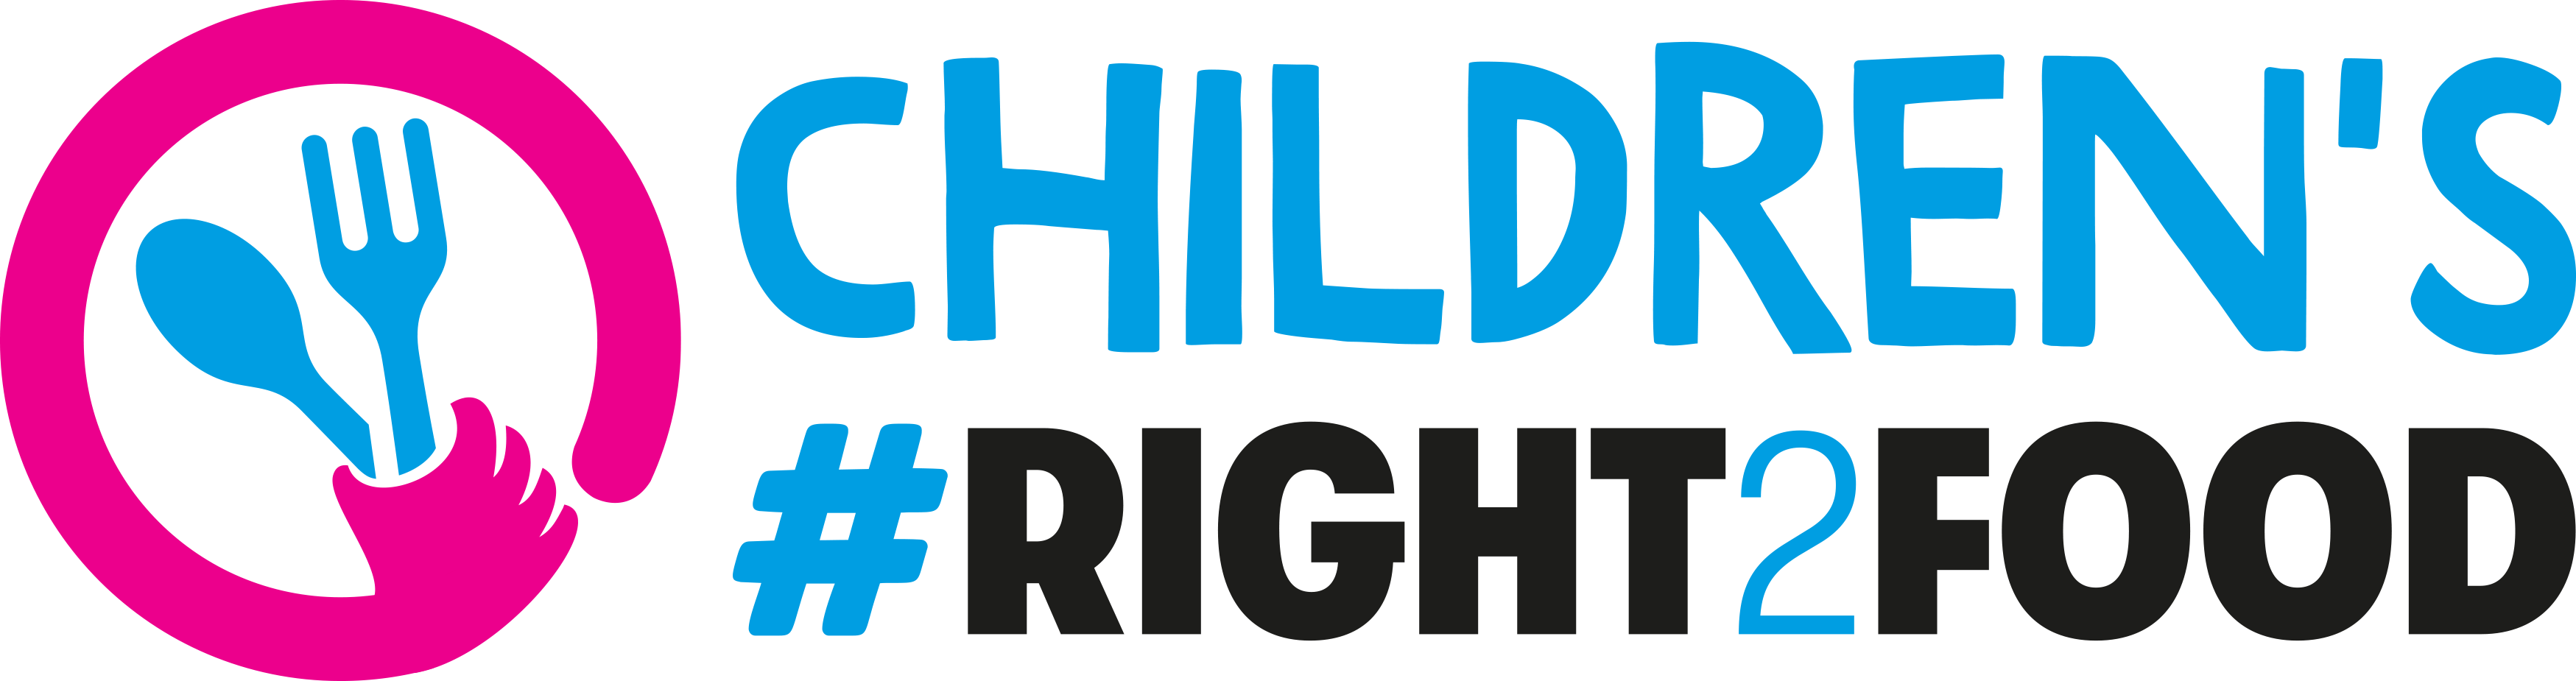 Children's Right2Food